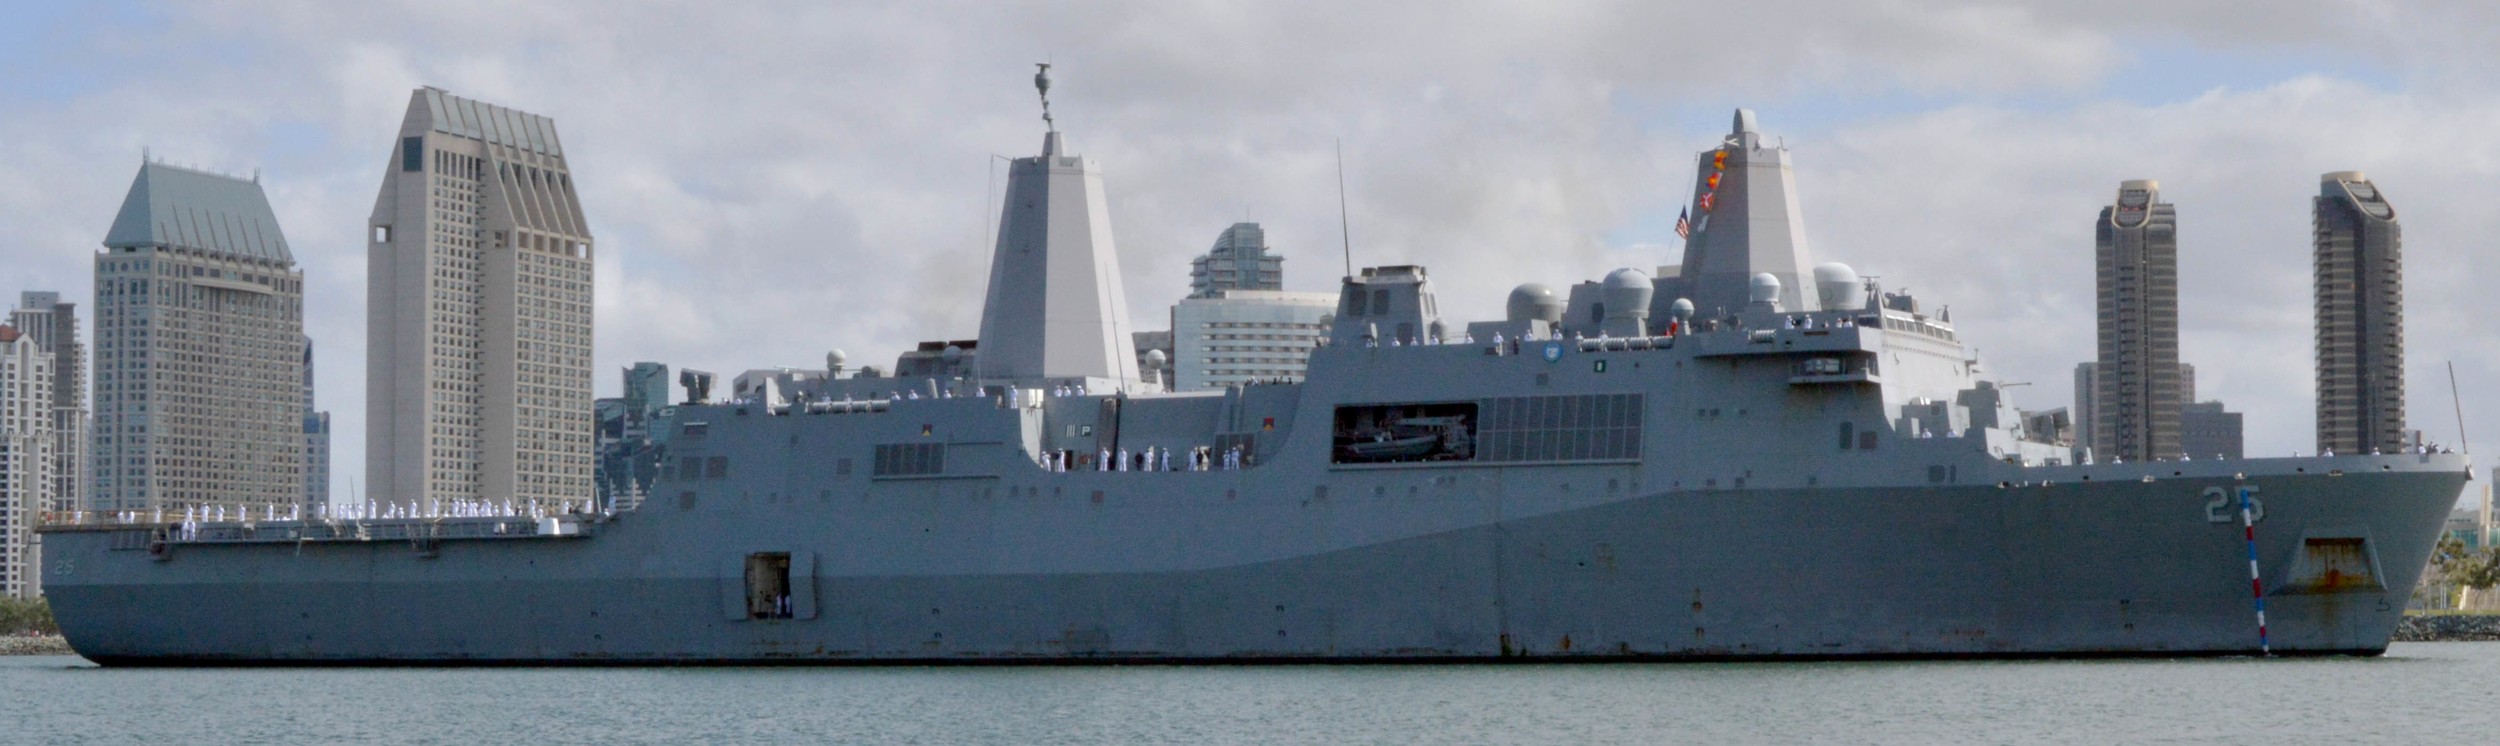 lpd-25 uss somerset san antonio class amphibious transport dock landing ship us navy san diego california 61